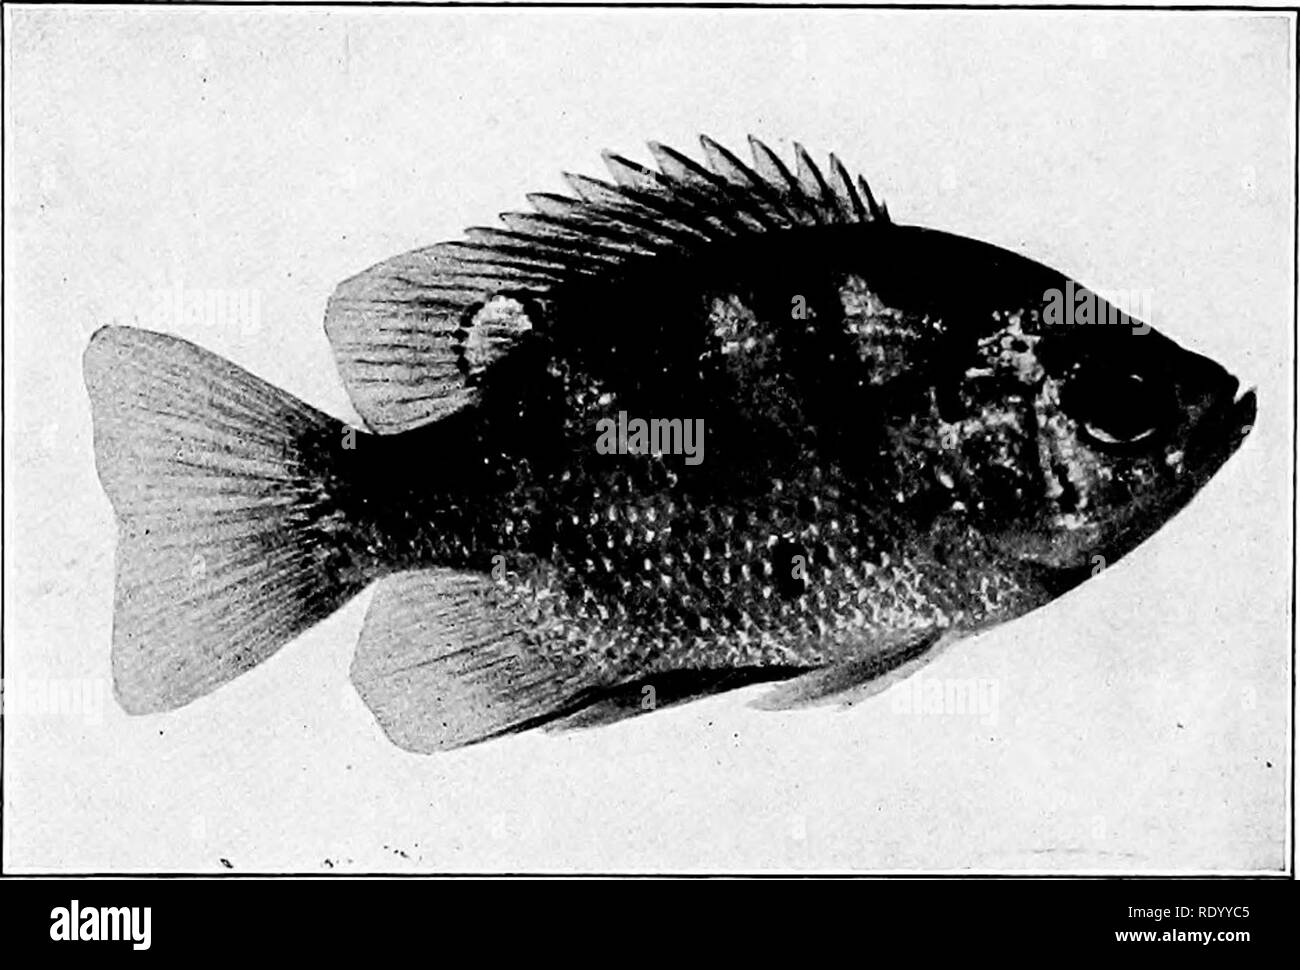 Aquarium species Black and White Stock Photos & Images - Page 3 - Alamy